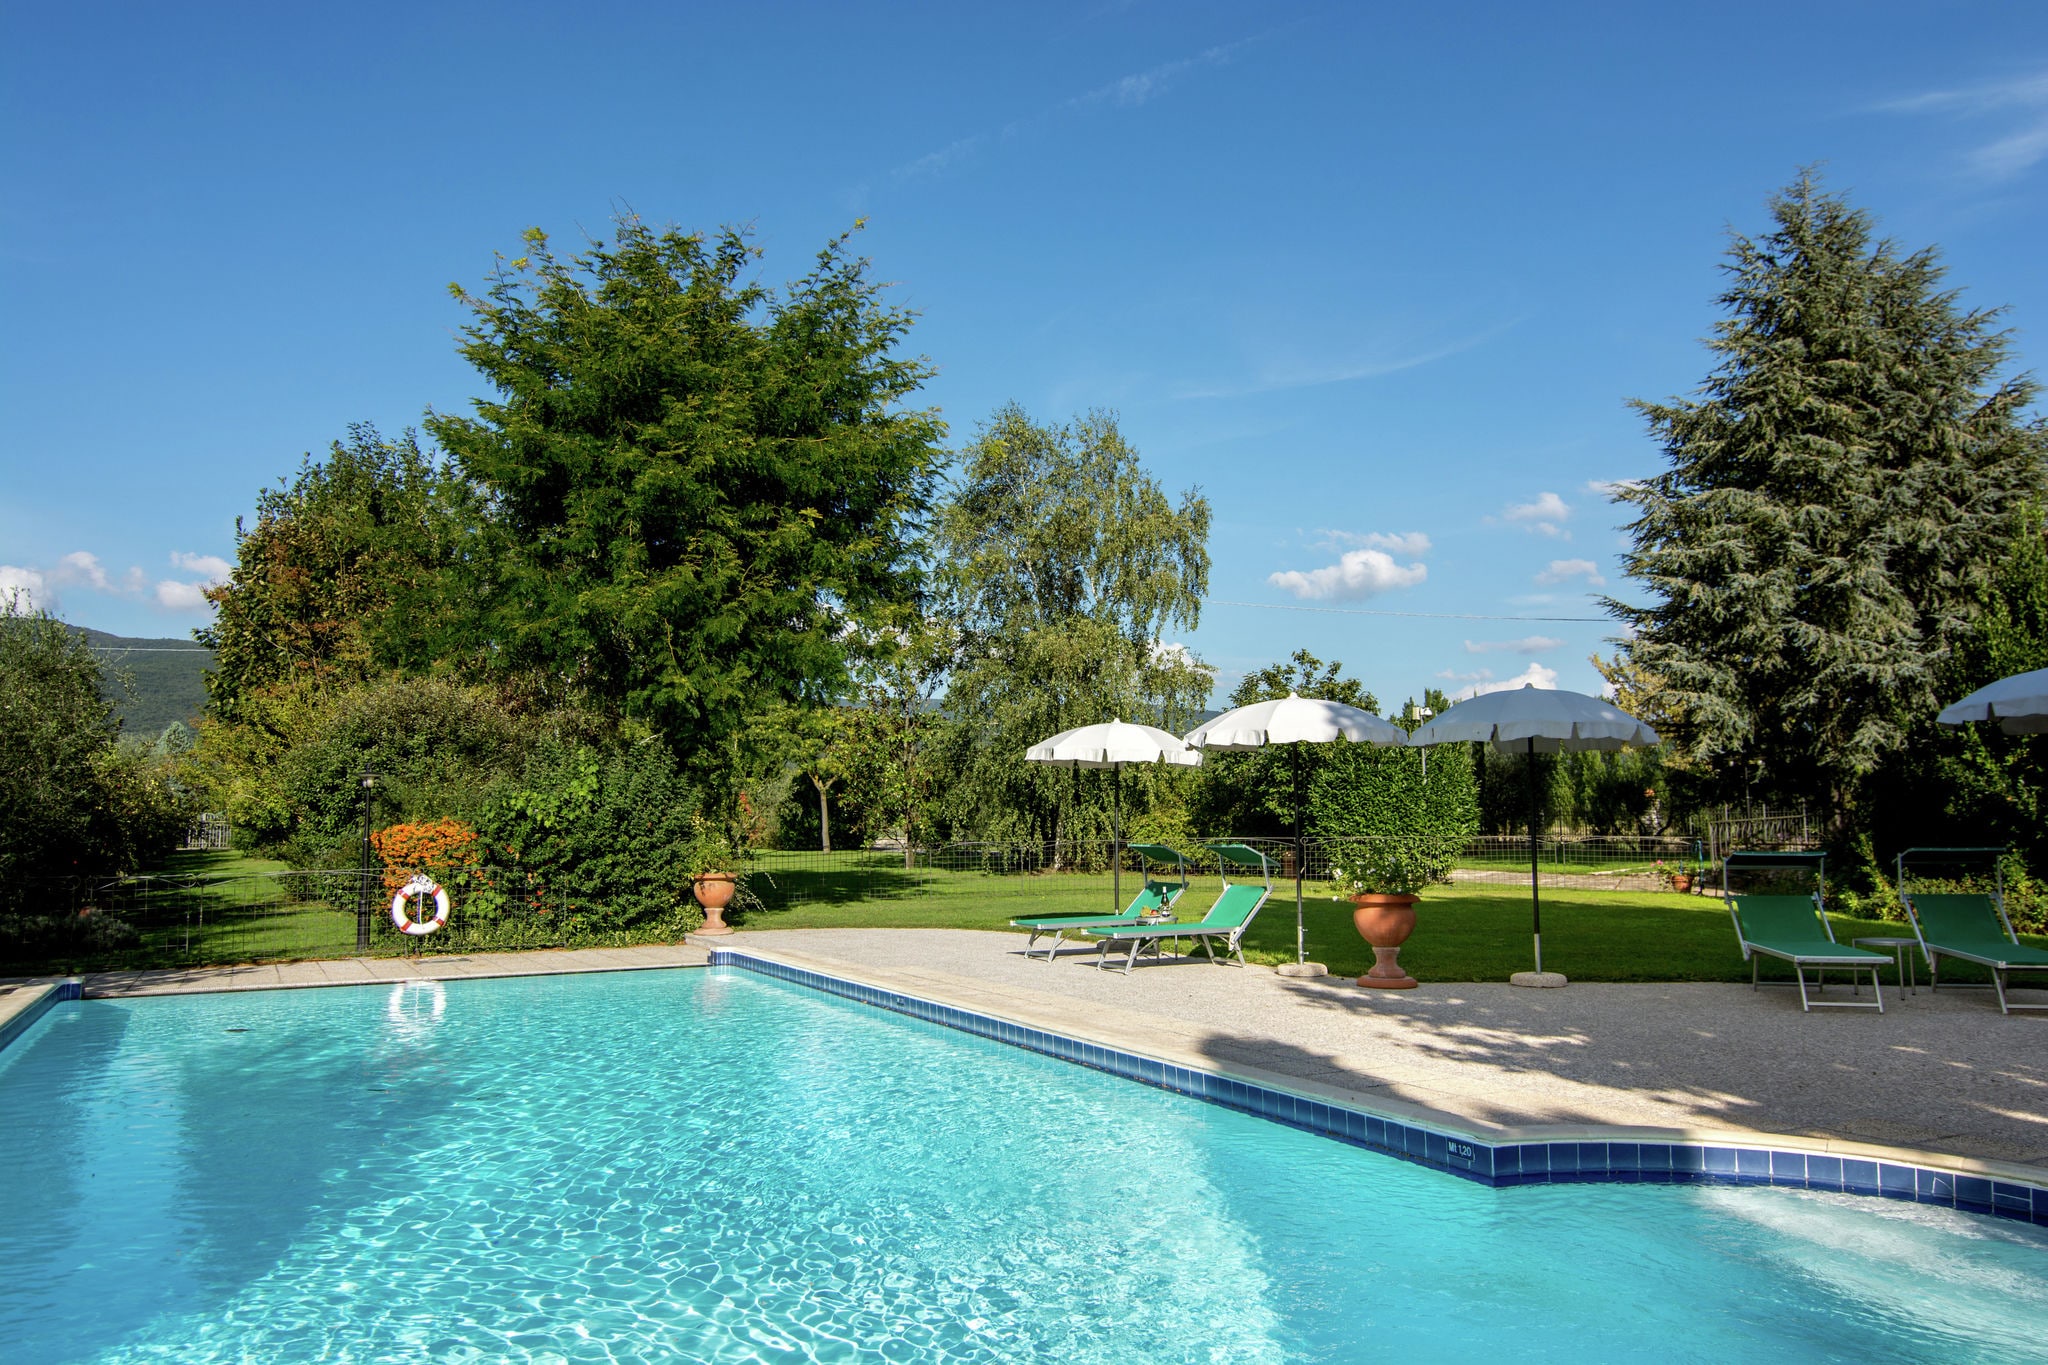 Luxurious, cozy apartment with pool near Cortona in Tuscany versatile